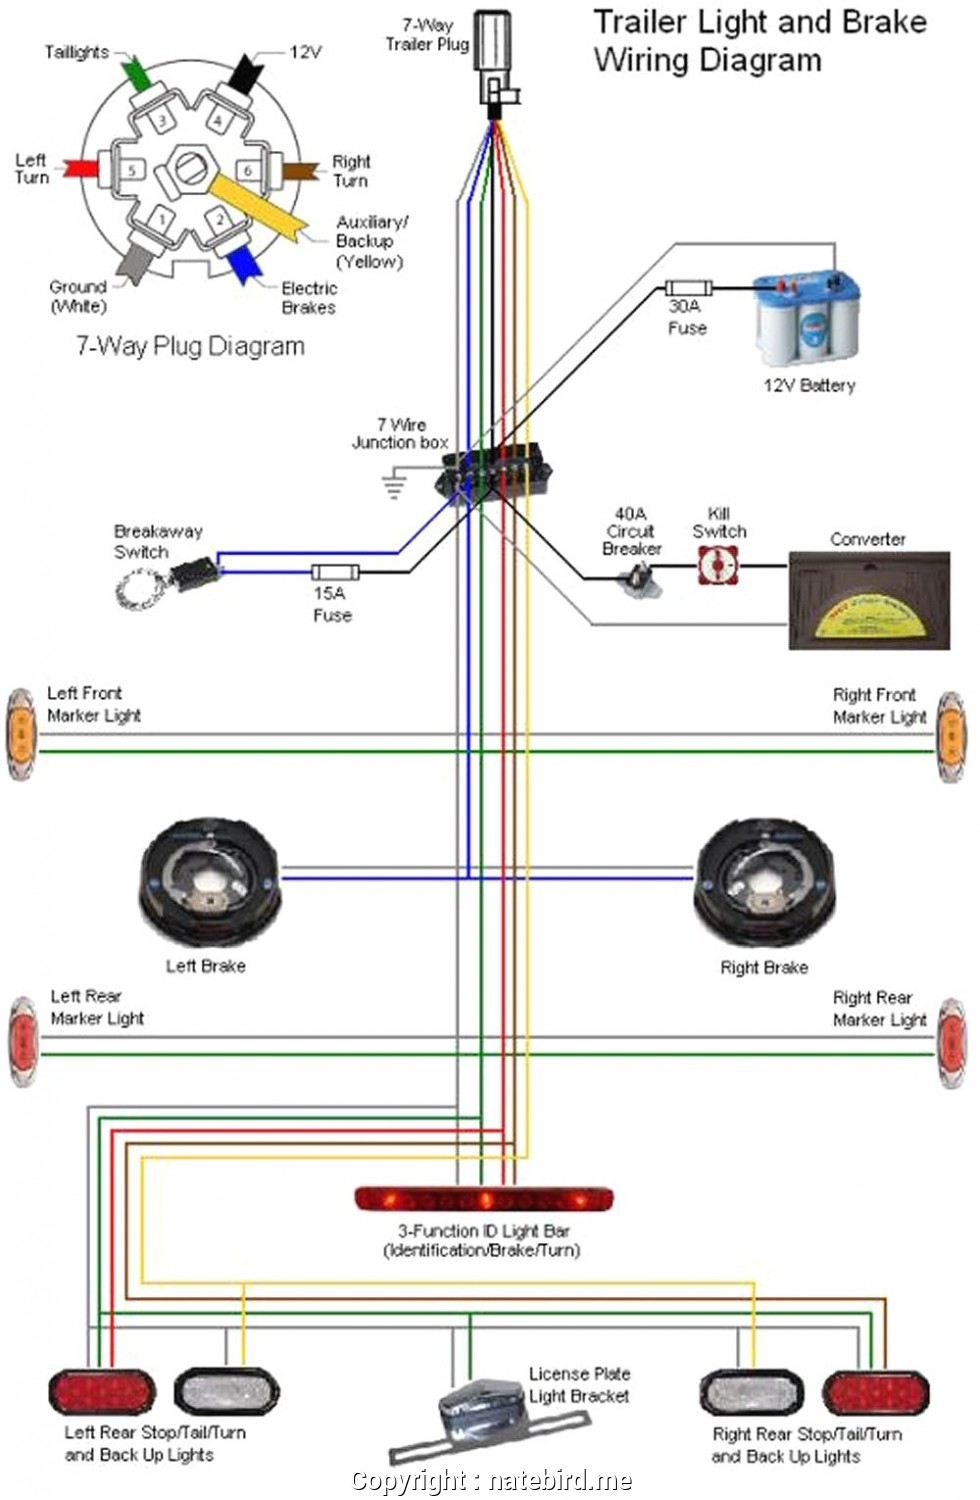 Pollak Trailer Plug Wiring Diagram | Wiring Diagram - Pollak Trailer Plug Wiring Diagram